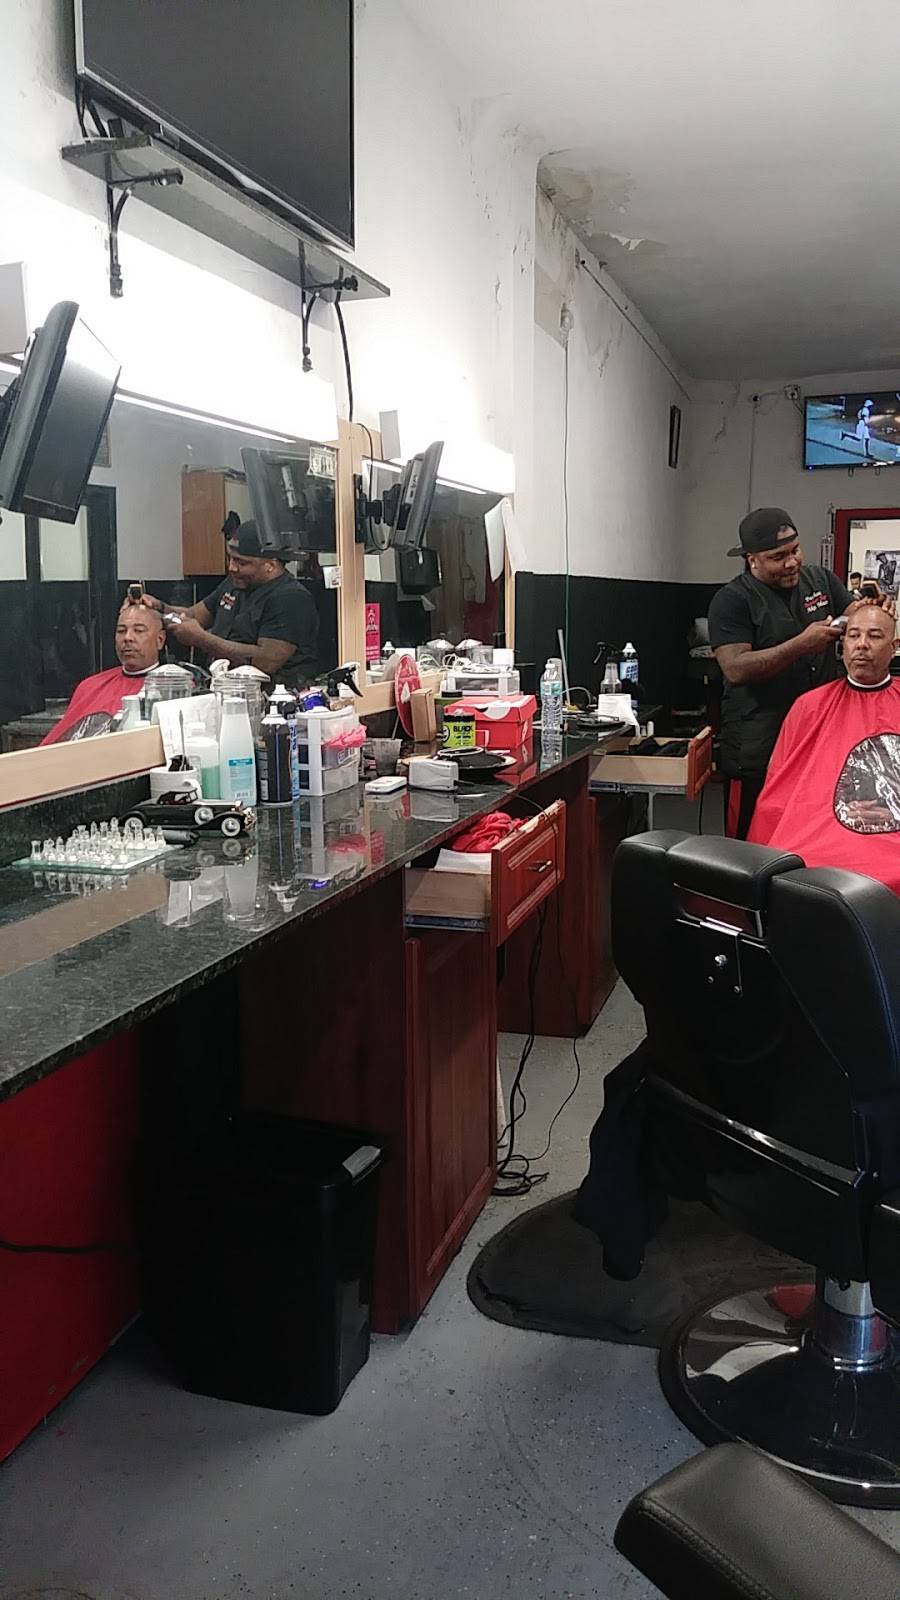 Pacheco Barber Shop | 850 Ali Baba Ave, Opa-locka, FL 33054, USA | Phone: (305) 927-0574